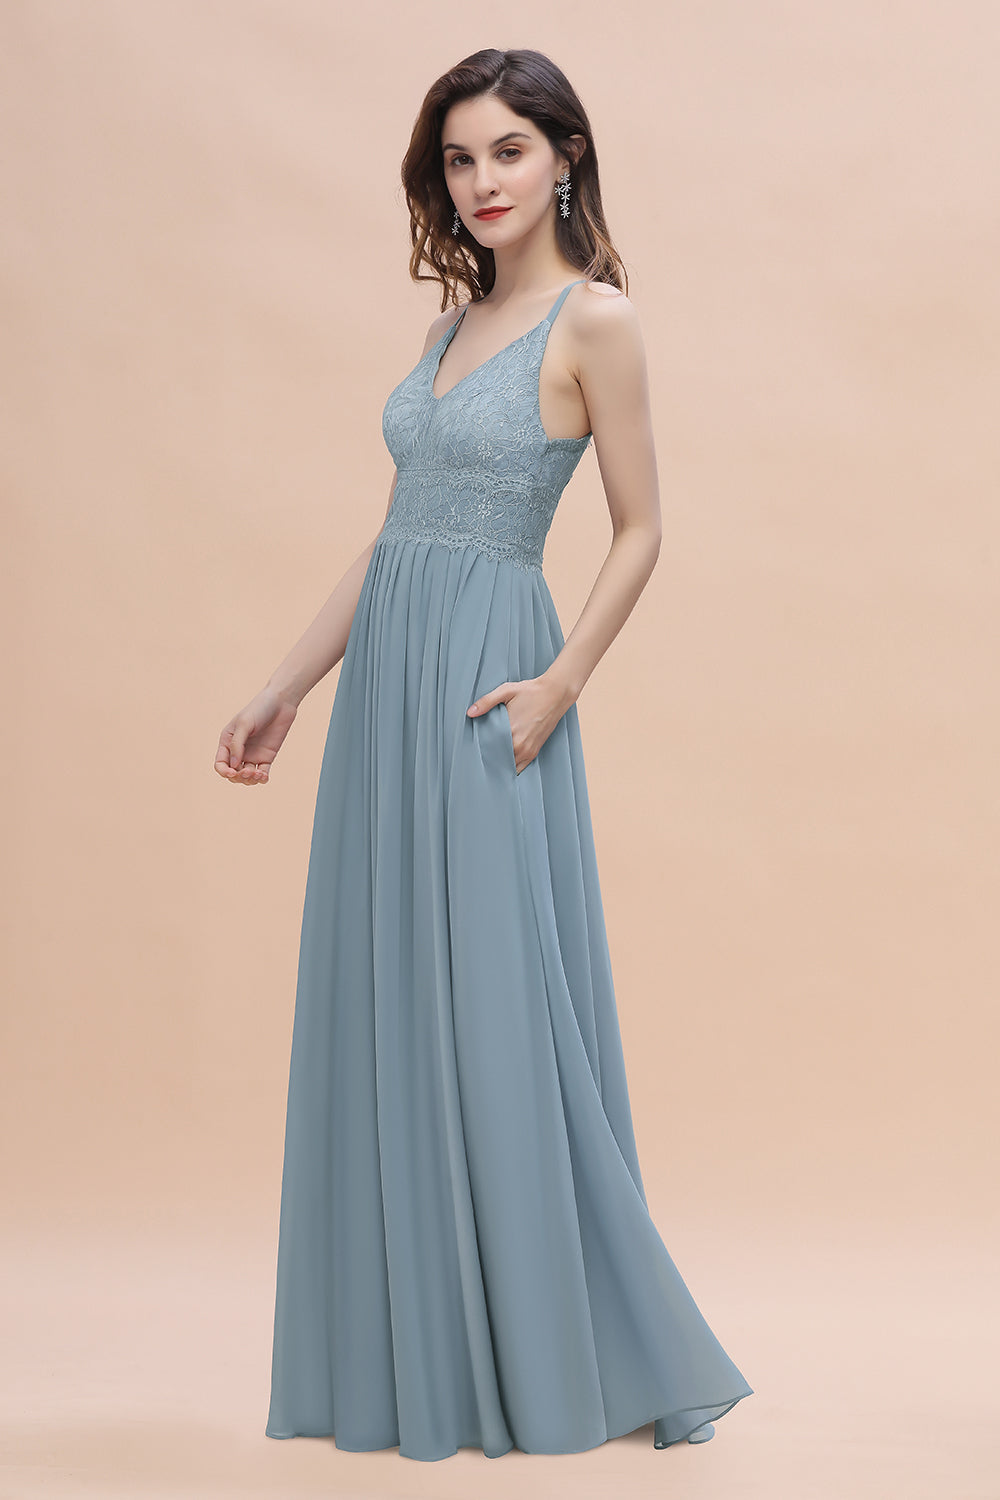 Stylish Straps V-Neck Chiffon Lace Dusty Blue Bridesmaid Dress On Sale-27dress